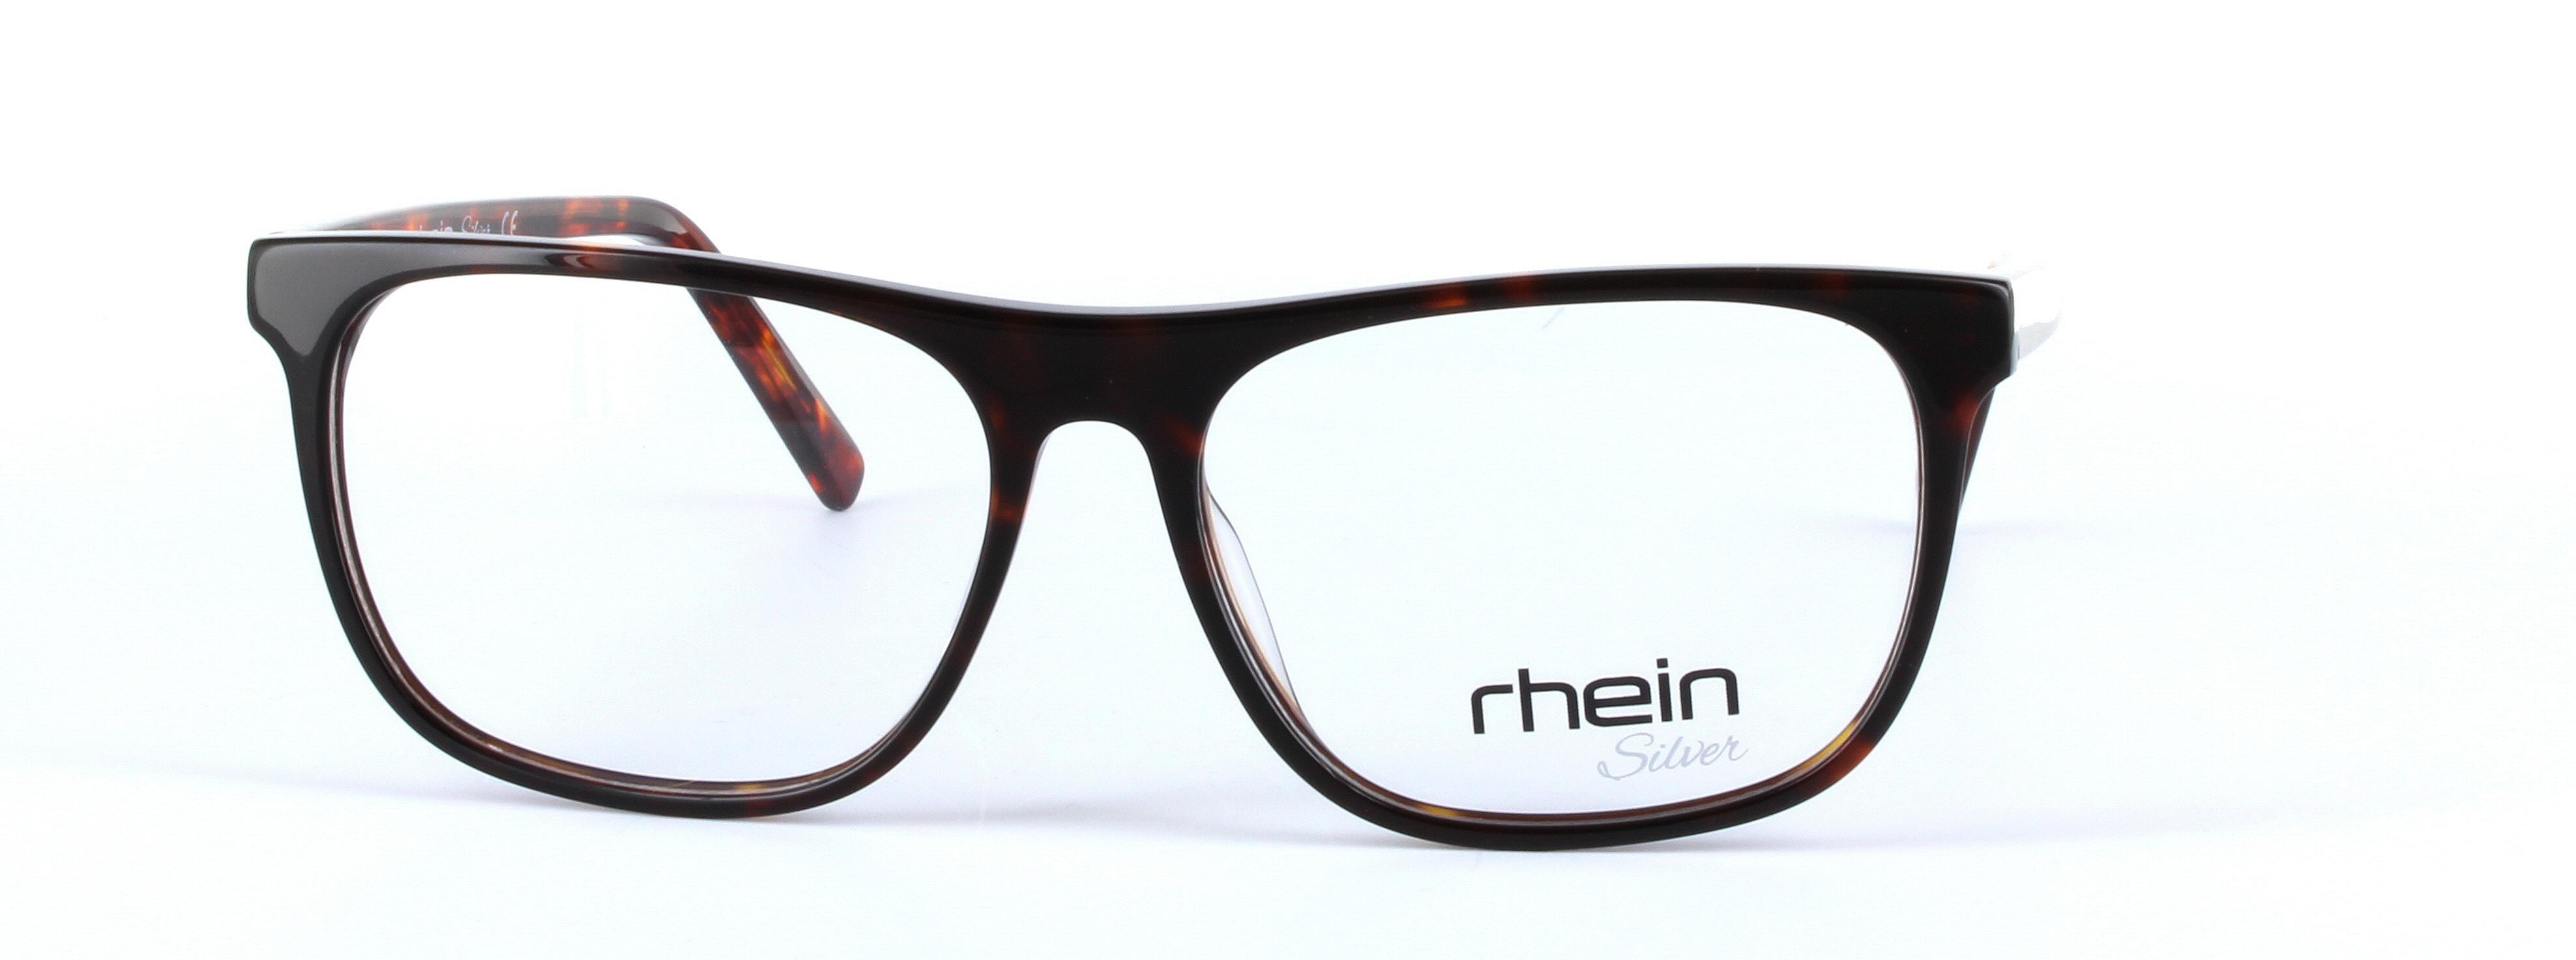 Cian Black and Tortoise Full Rim Rectangular Plastic Glasses - Image View 5